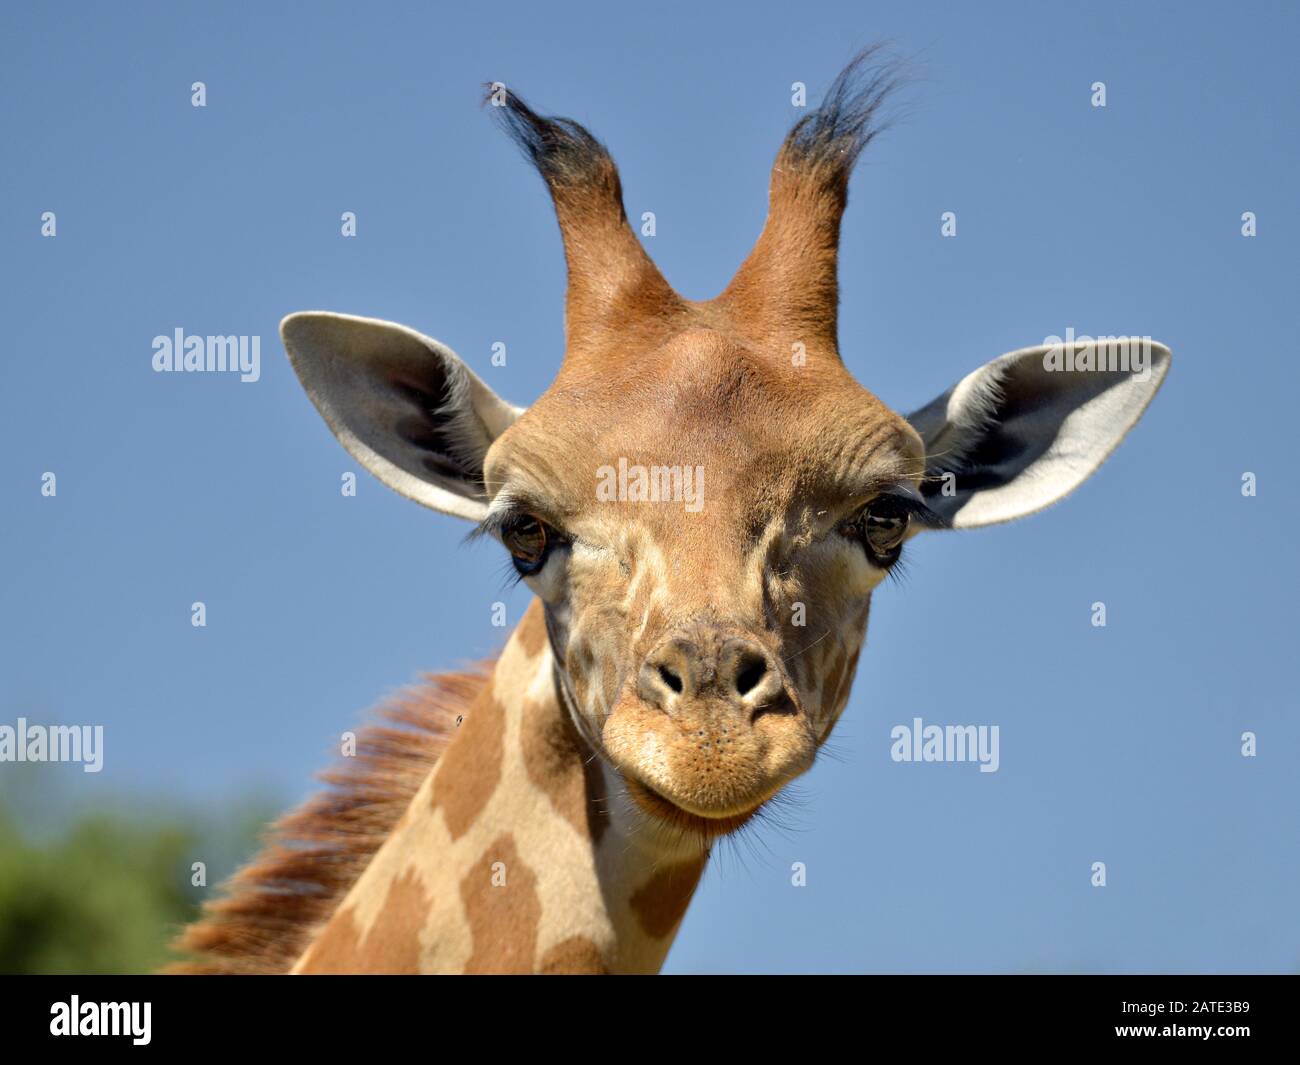 Portrait of face young giraffe (Giraffa camelopardalis) on blue sky background Stock Photo